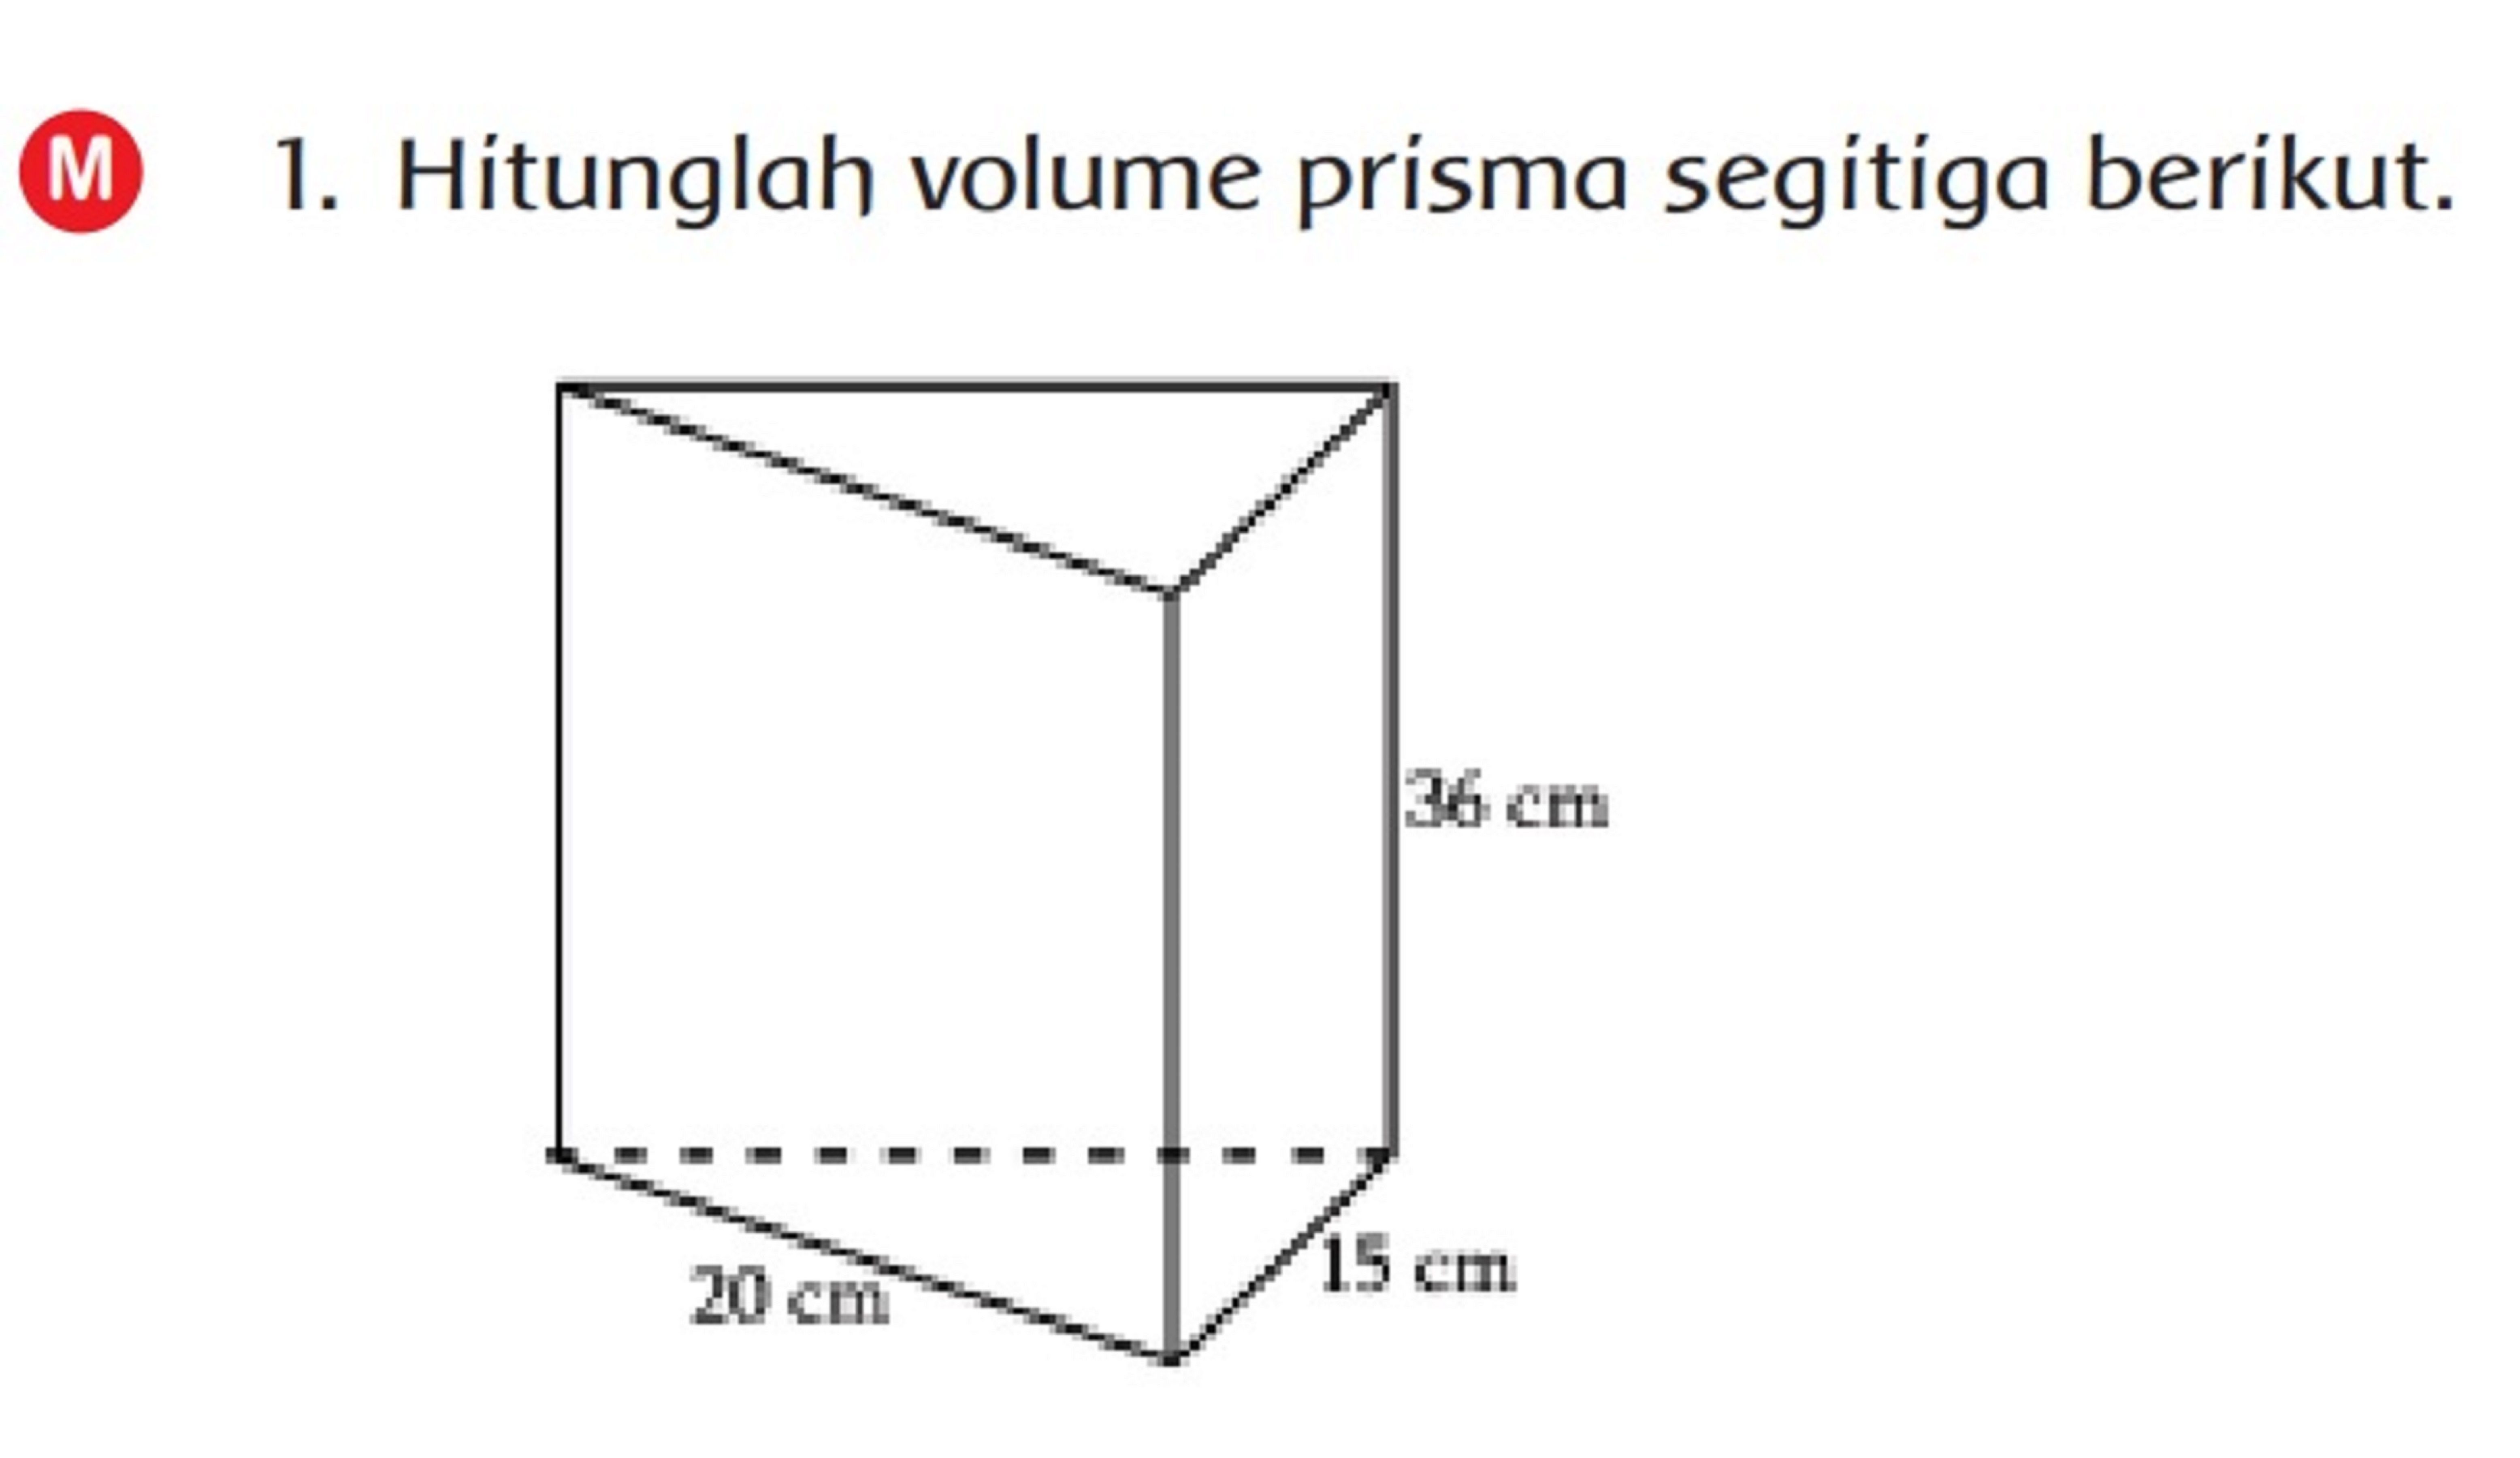 Volume prisma segitiga